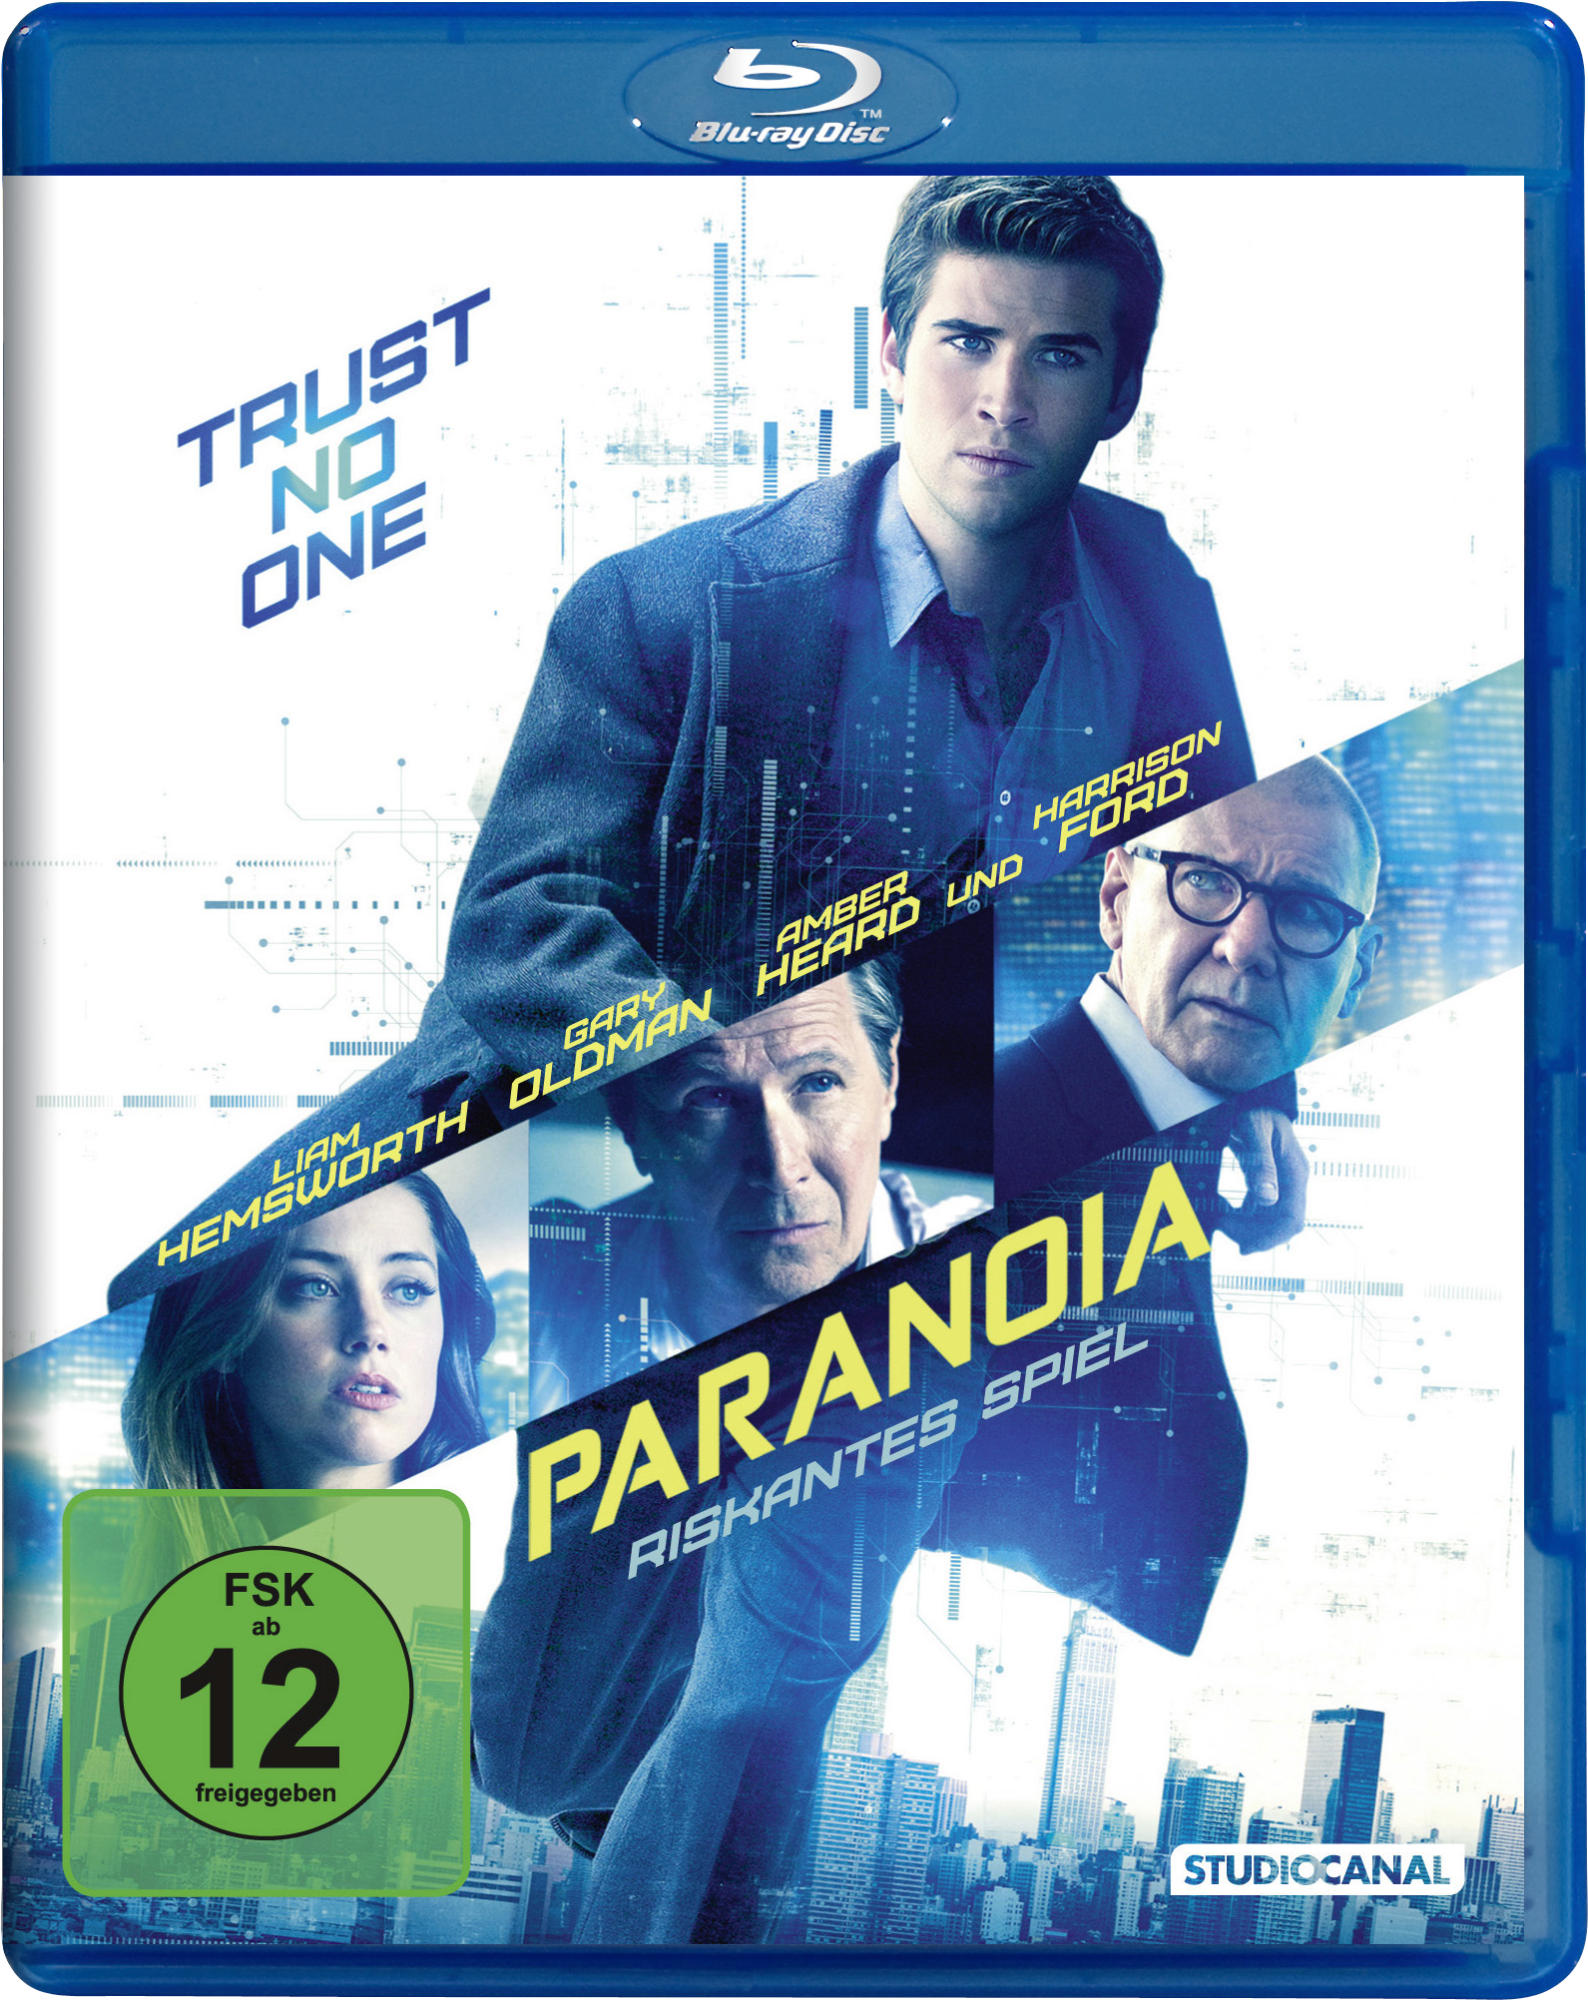 Riskantes - Paranoia Spiel Blu-ray